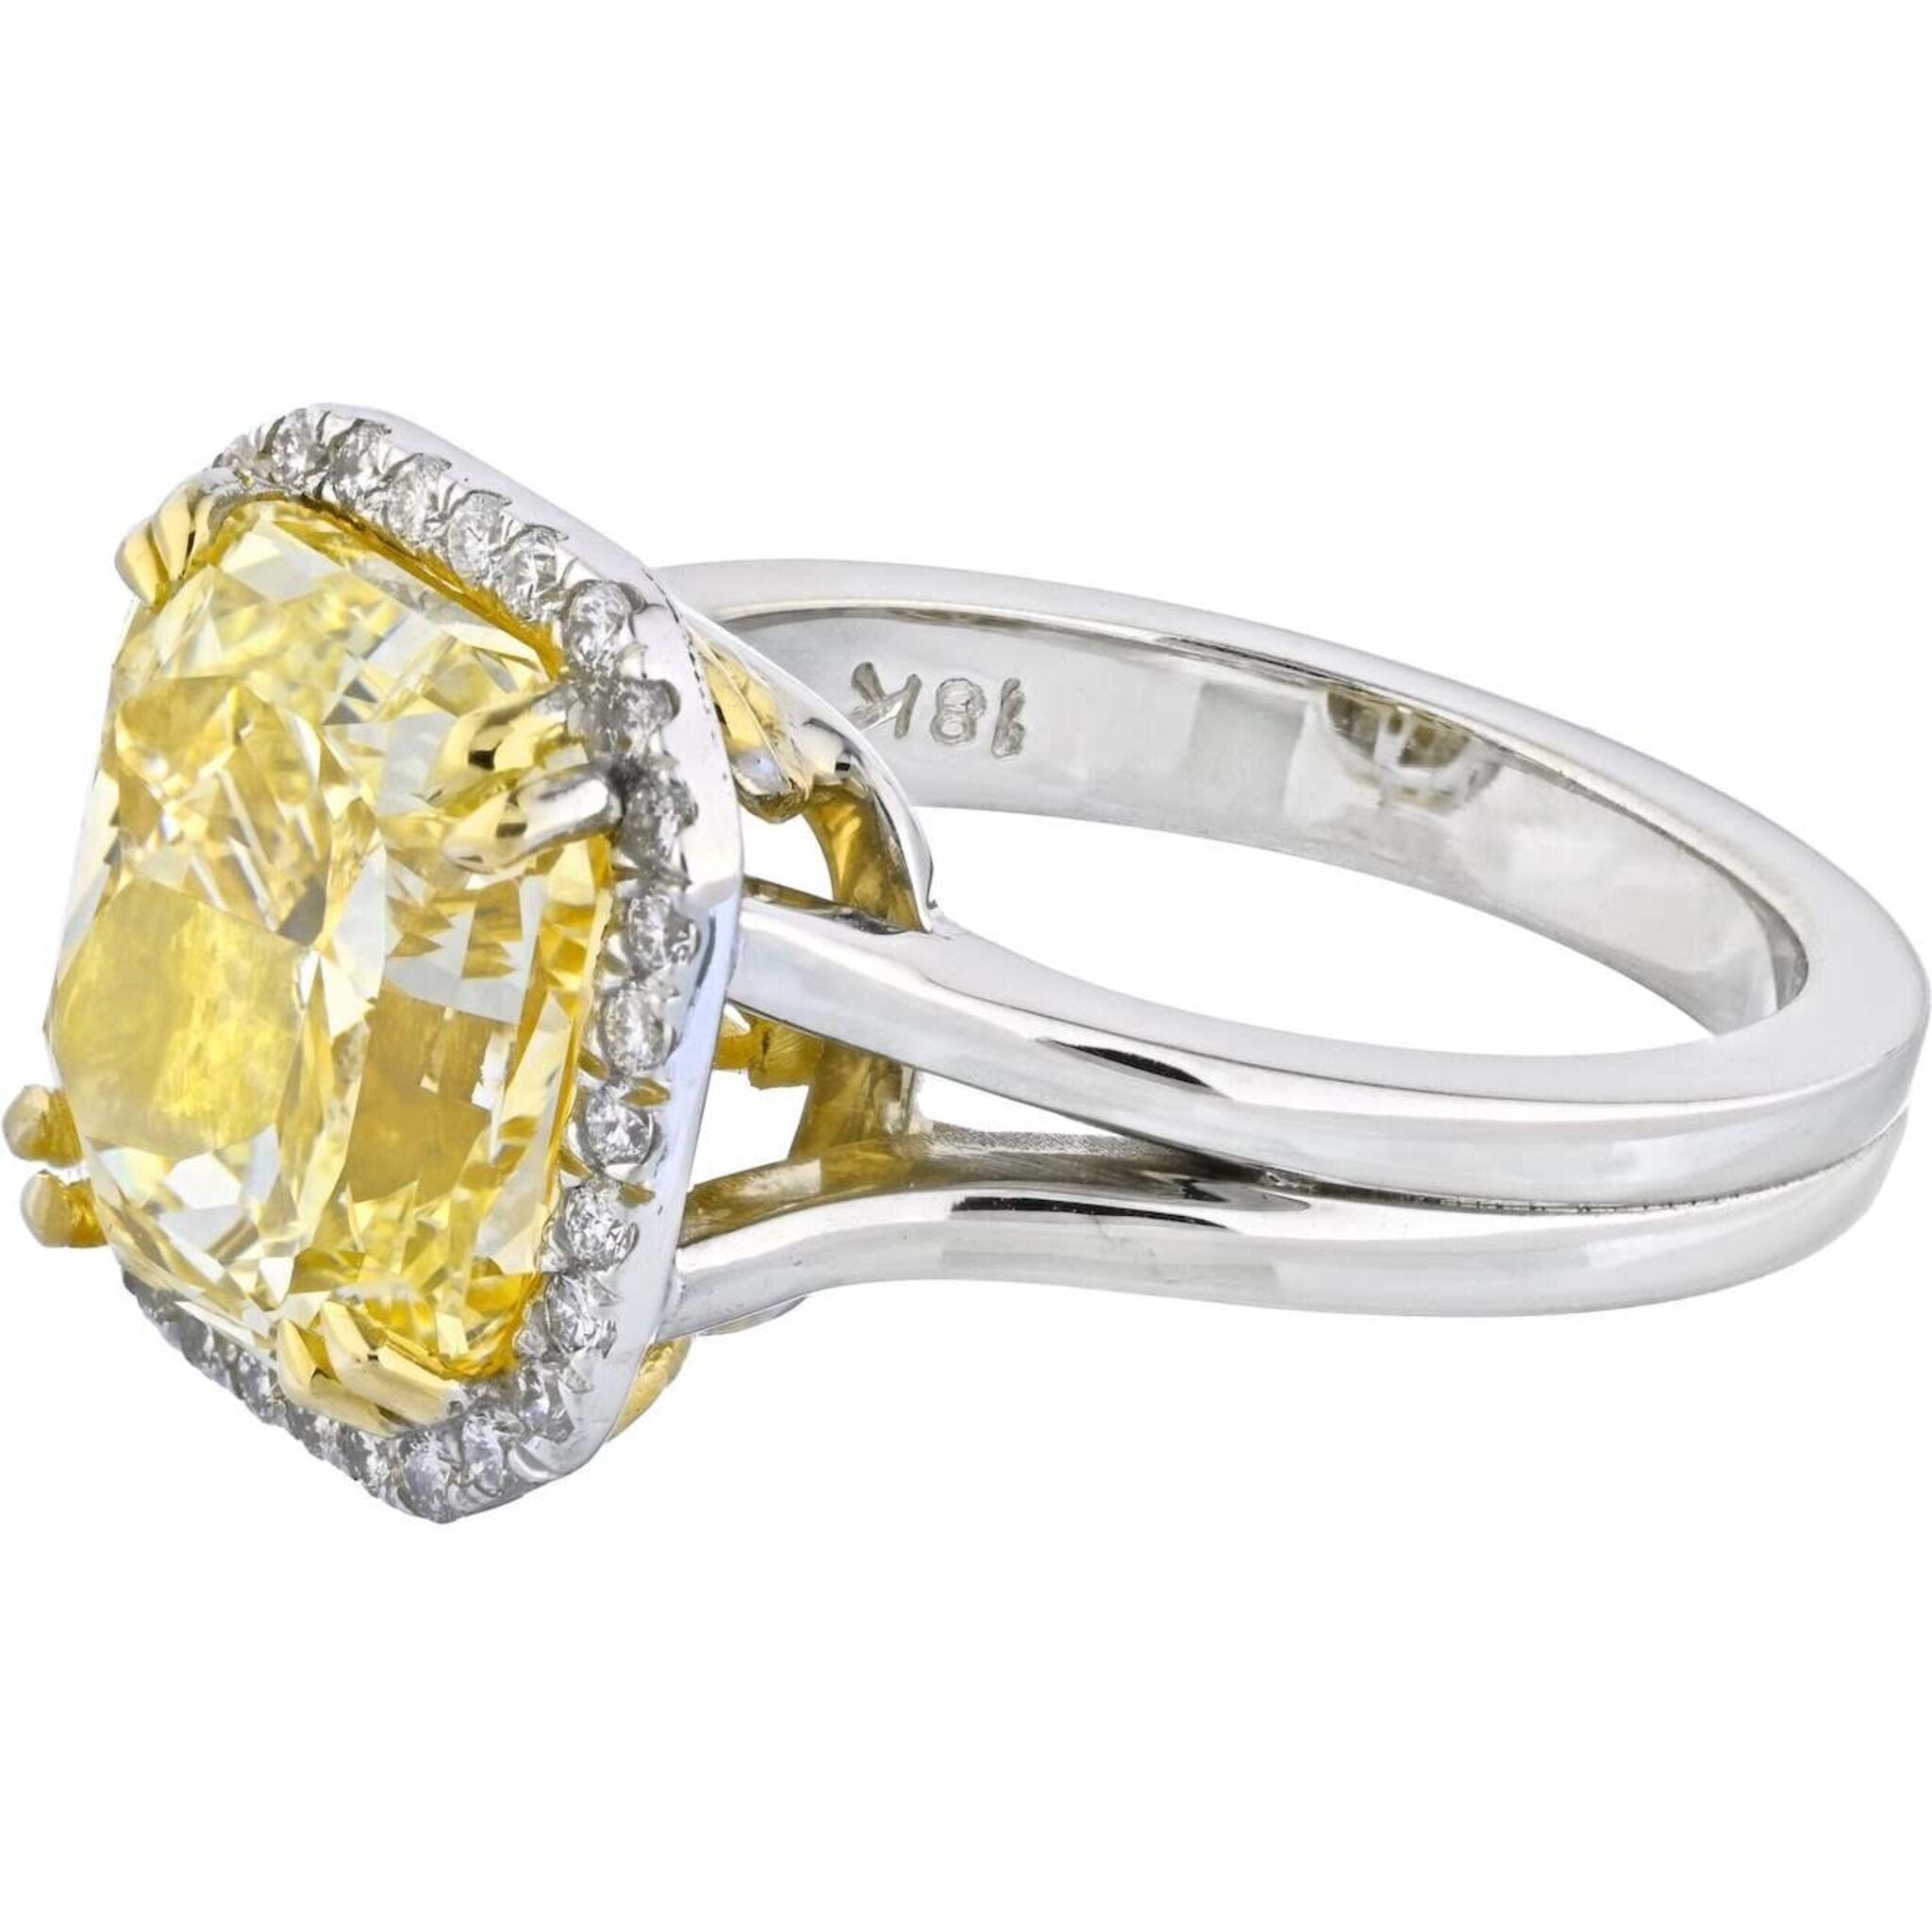 5 Carat Radiant Cut Diamond Fancy Intense Yellow Engagement Ring